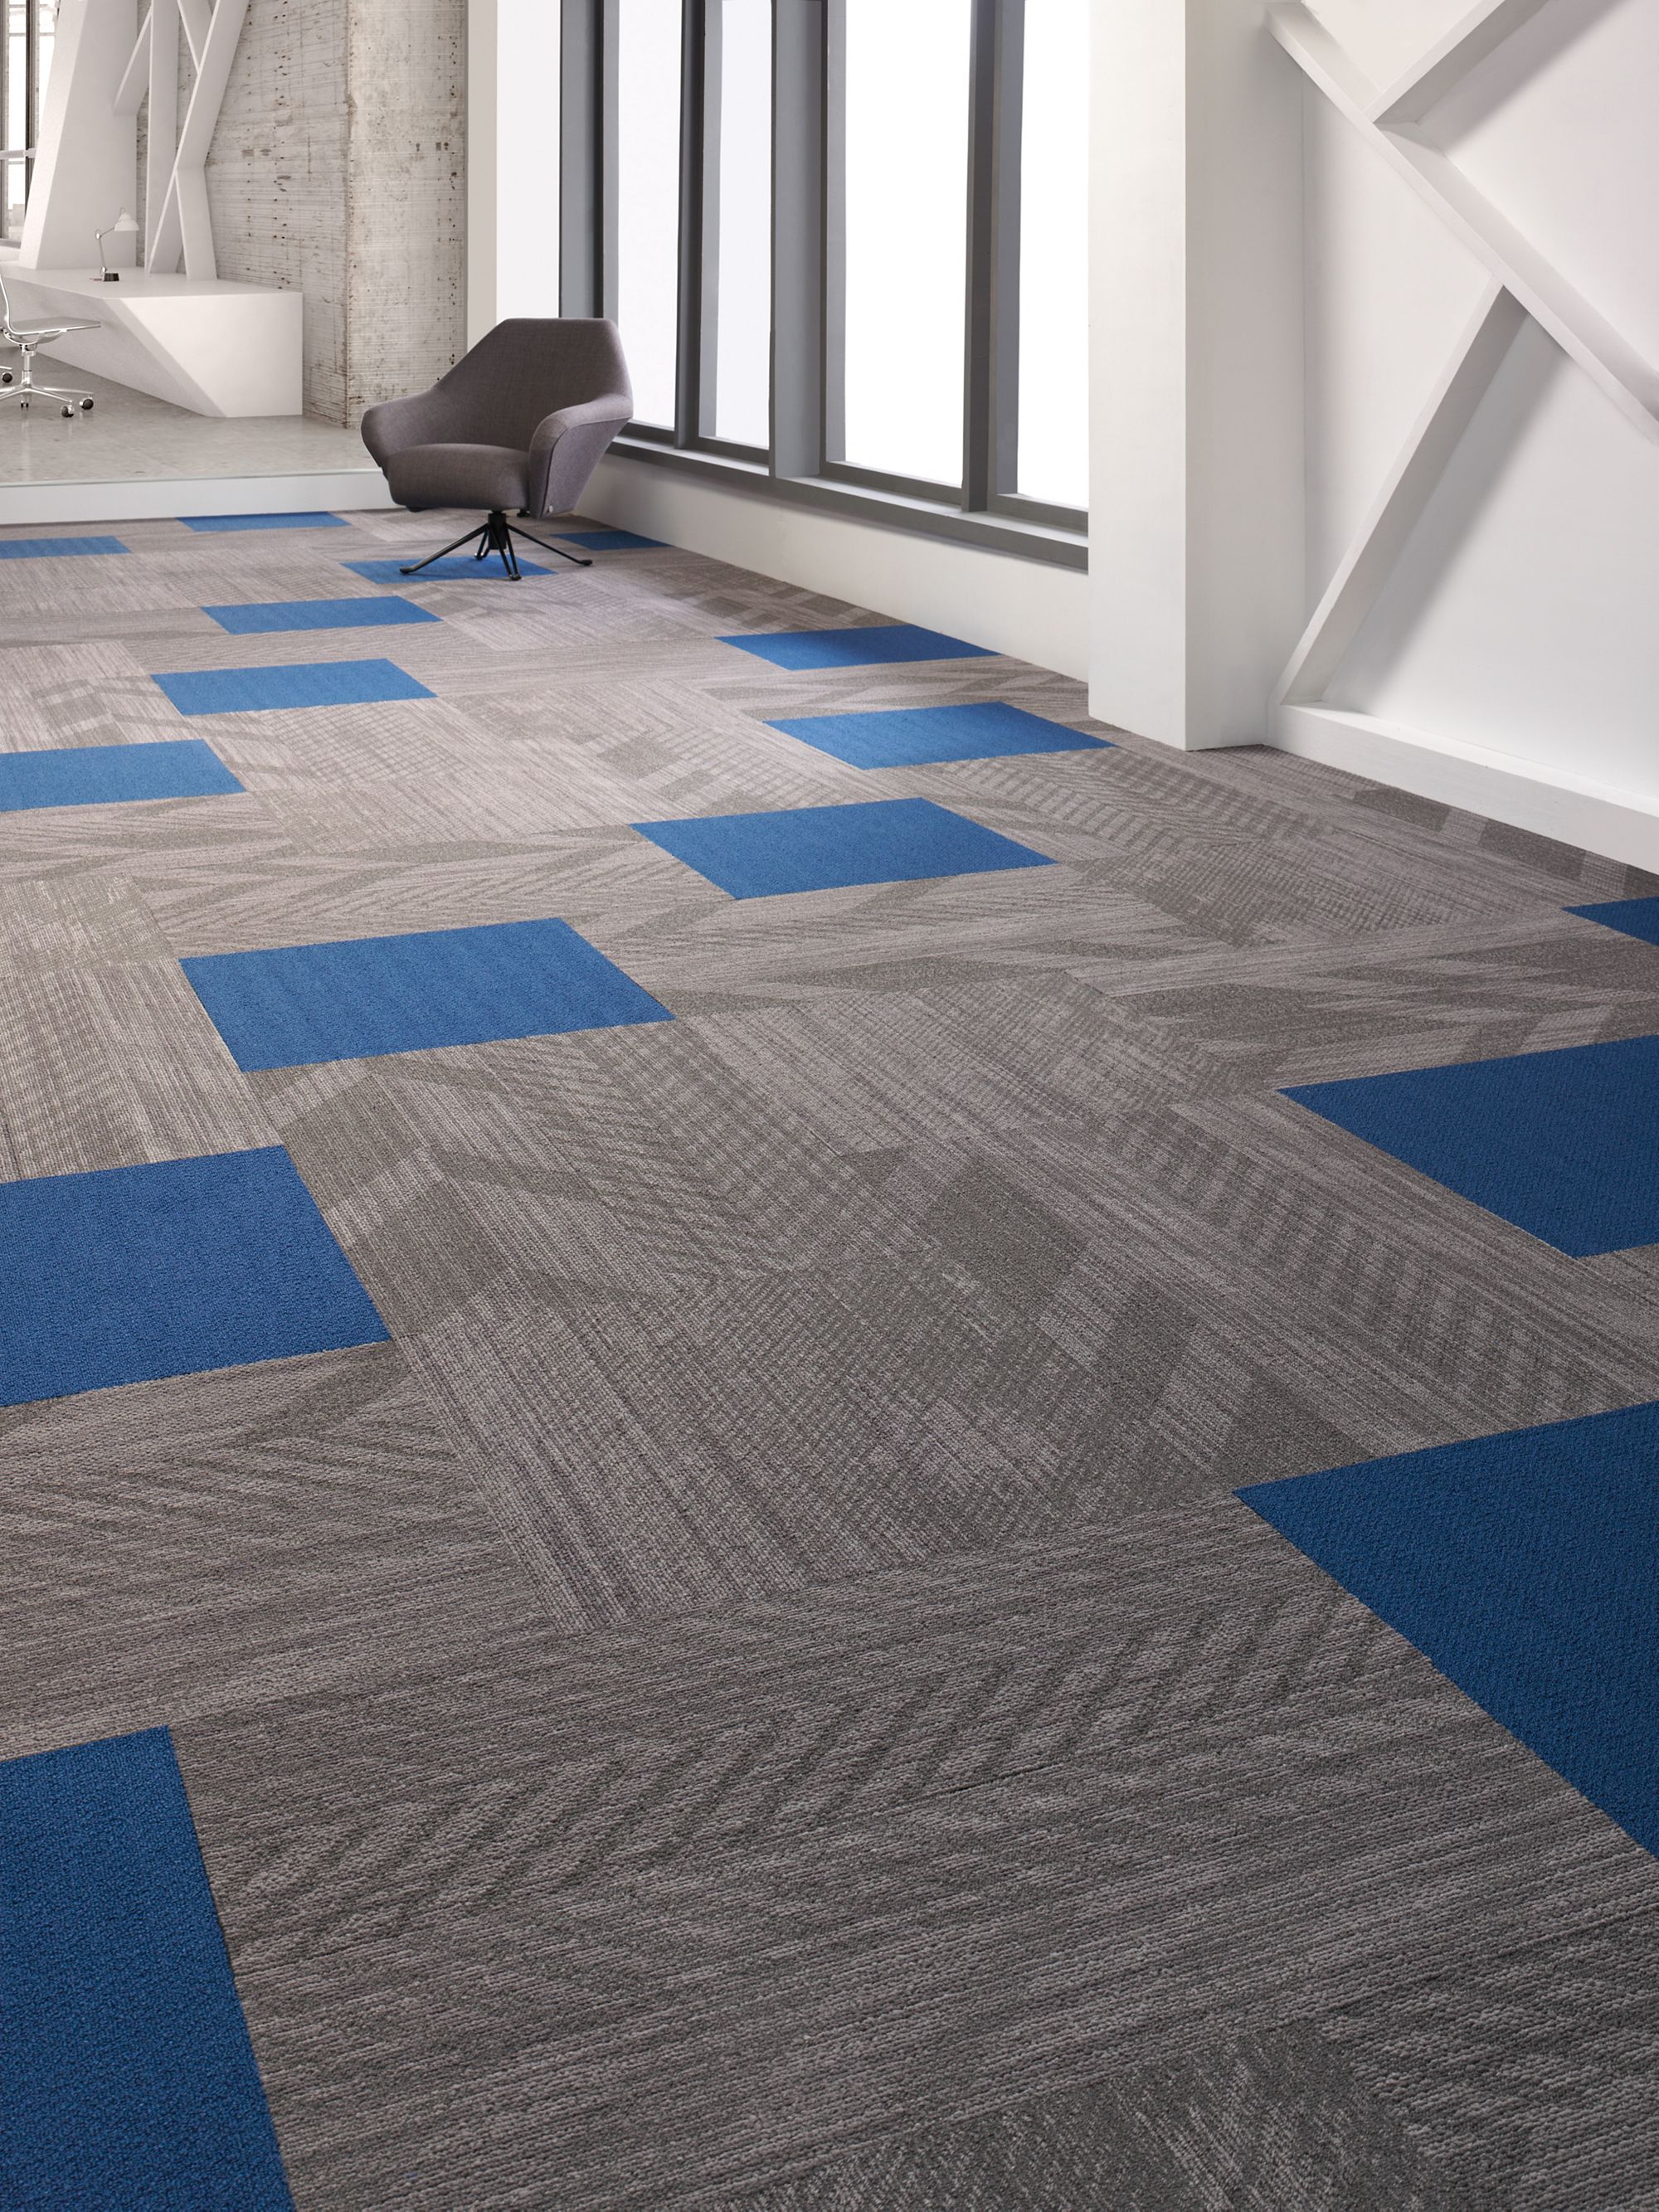 Carpet Tile Colorbeat Tile National Blue Mohawk Group